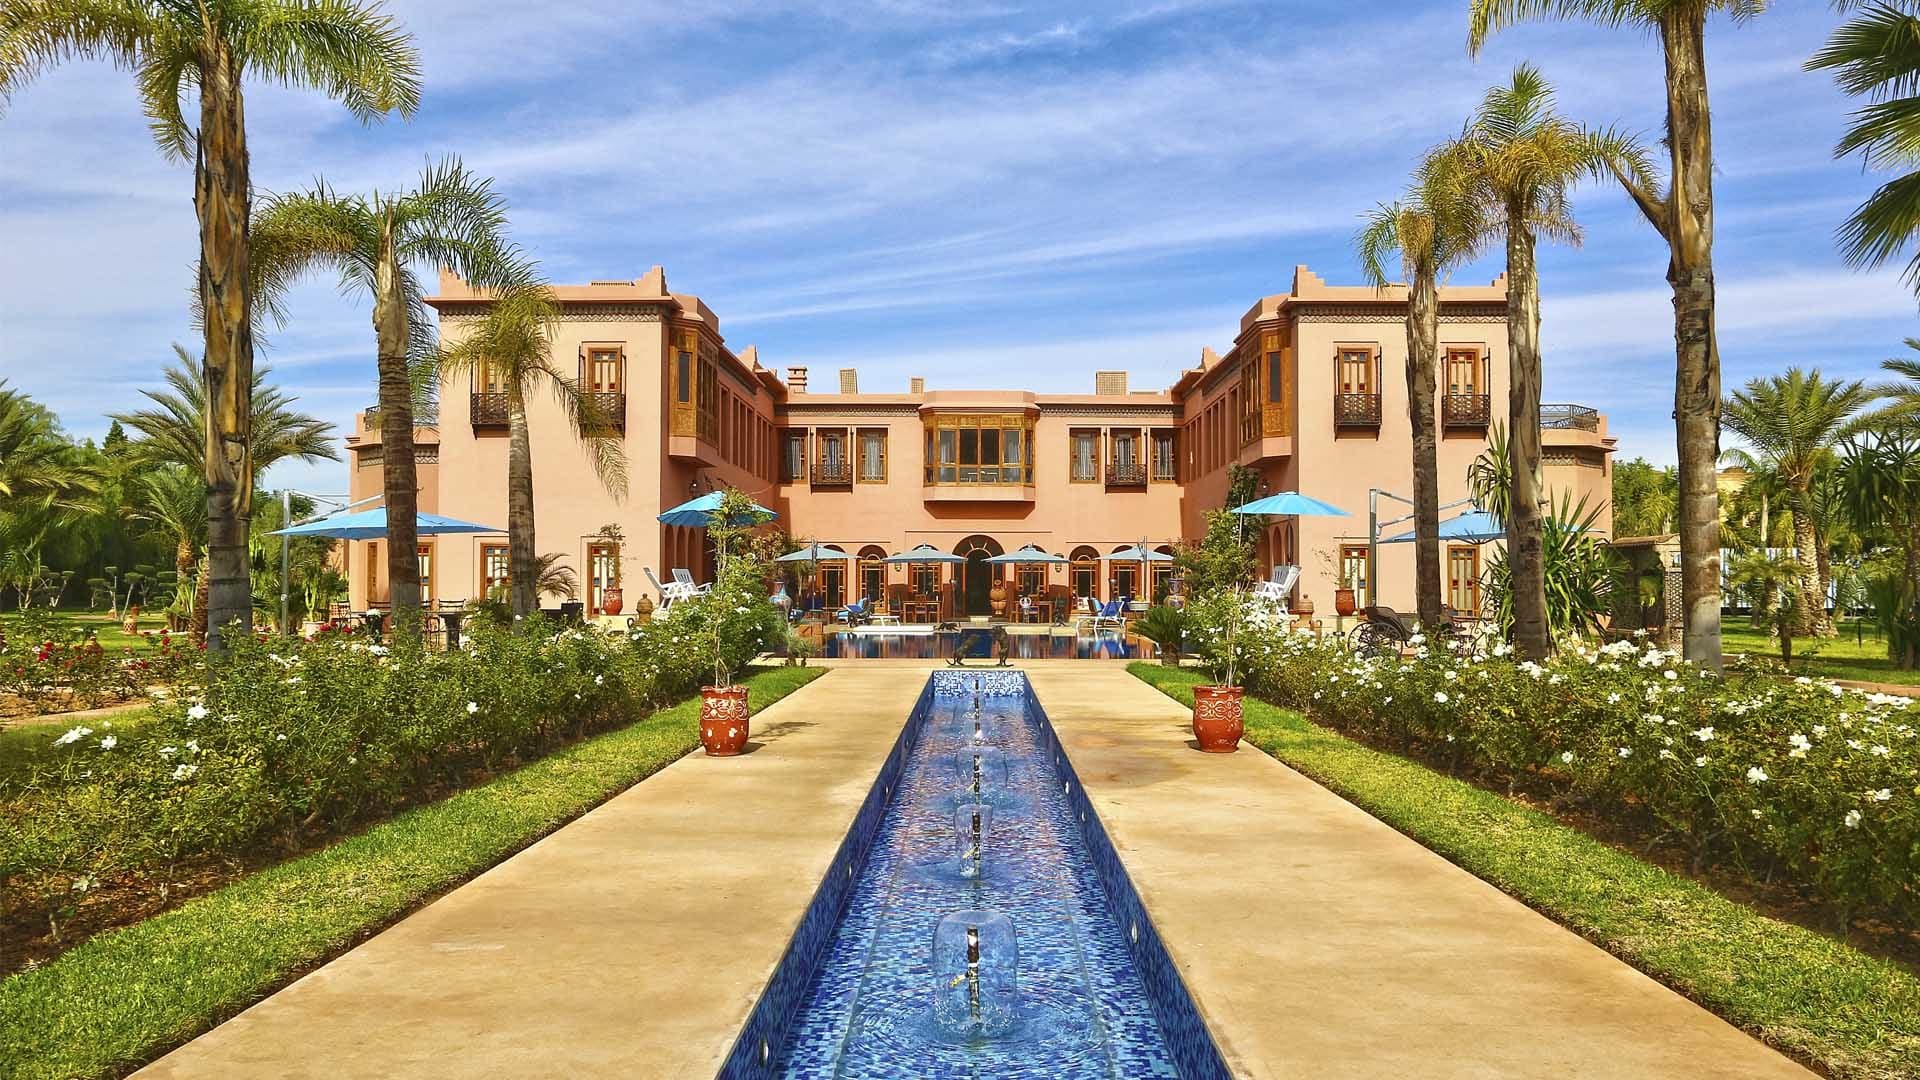 10 Bedroom Villa For Sale Marrakech Lp08701 1935c2a90c748400.jpg